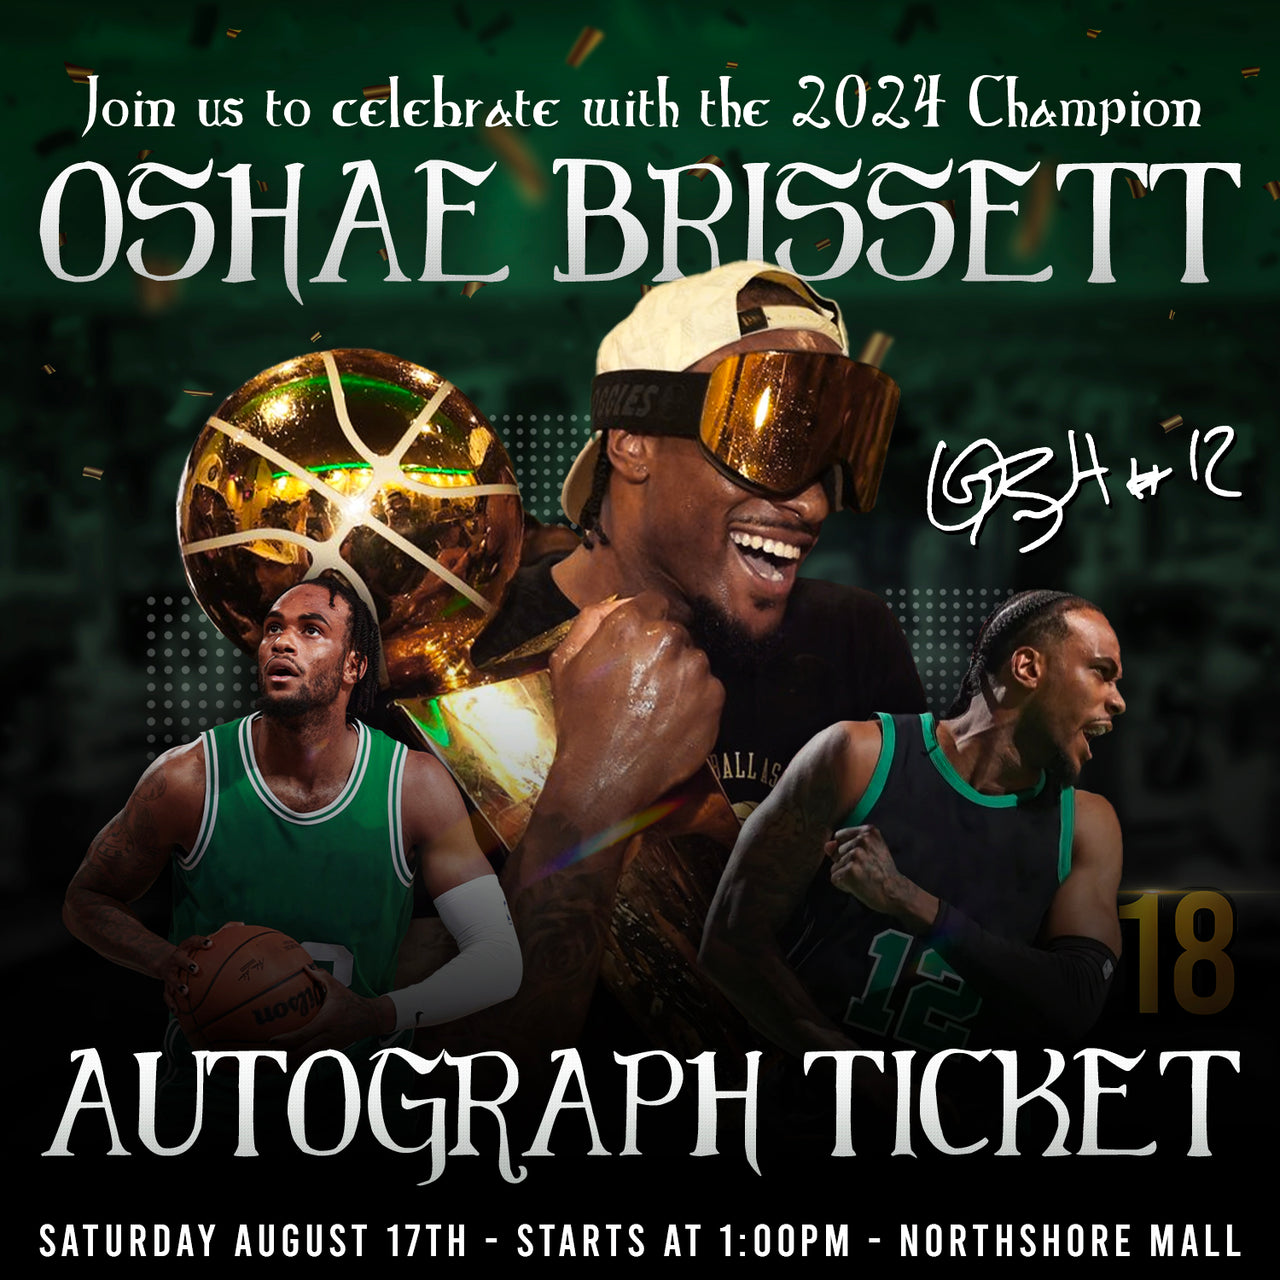 Oshae Brissett Celtics Championship Experience Tickets